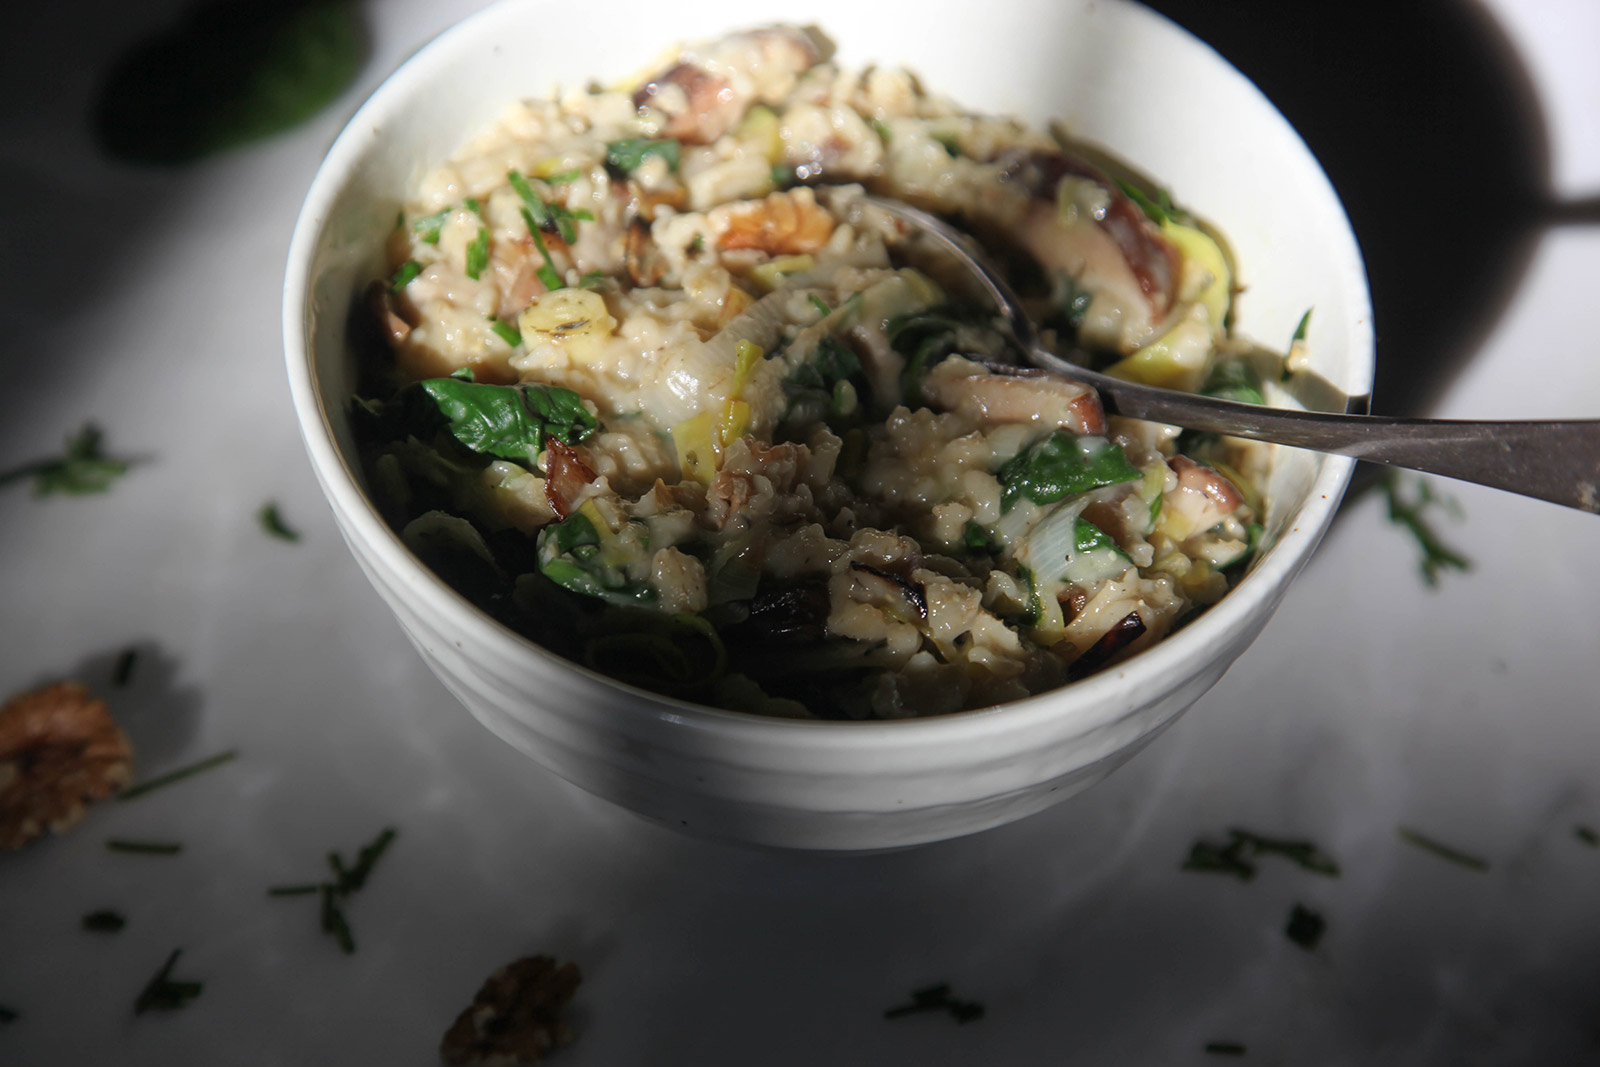 Savory Oatmeal with leeks, shiitake mushrooms, and spinach